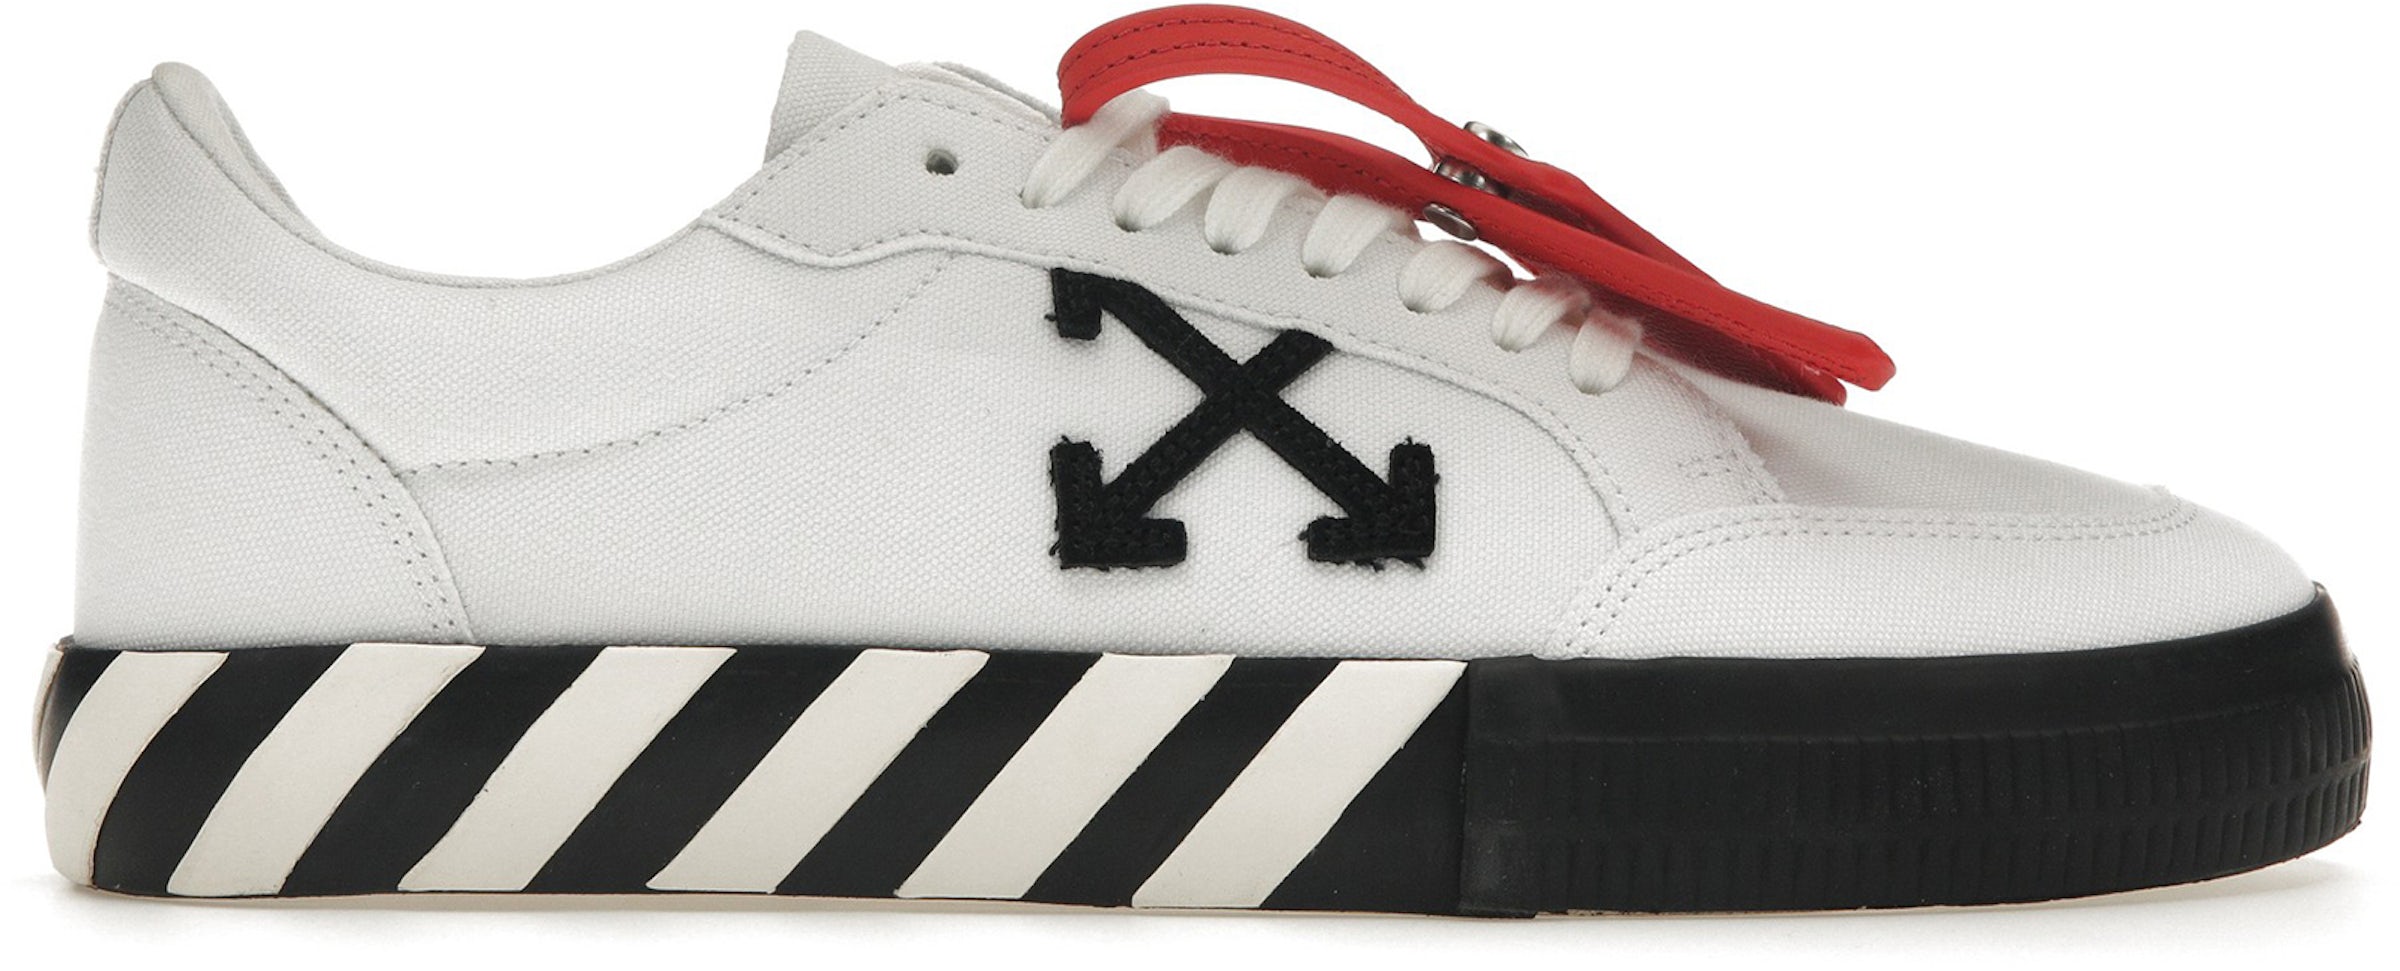 NIB OFF-WHITE C/O VIRGIL ABLOH White Vulcanized Canvas Sneakers Size 6/36  $330